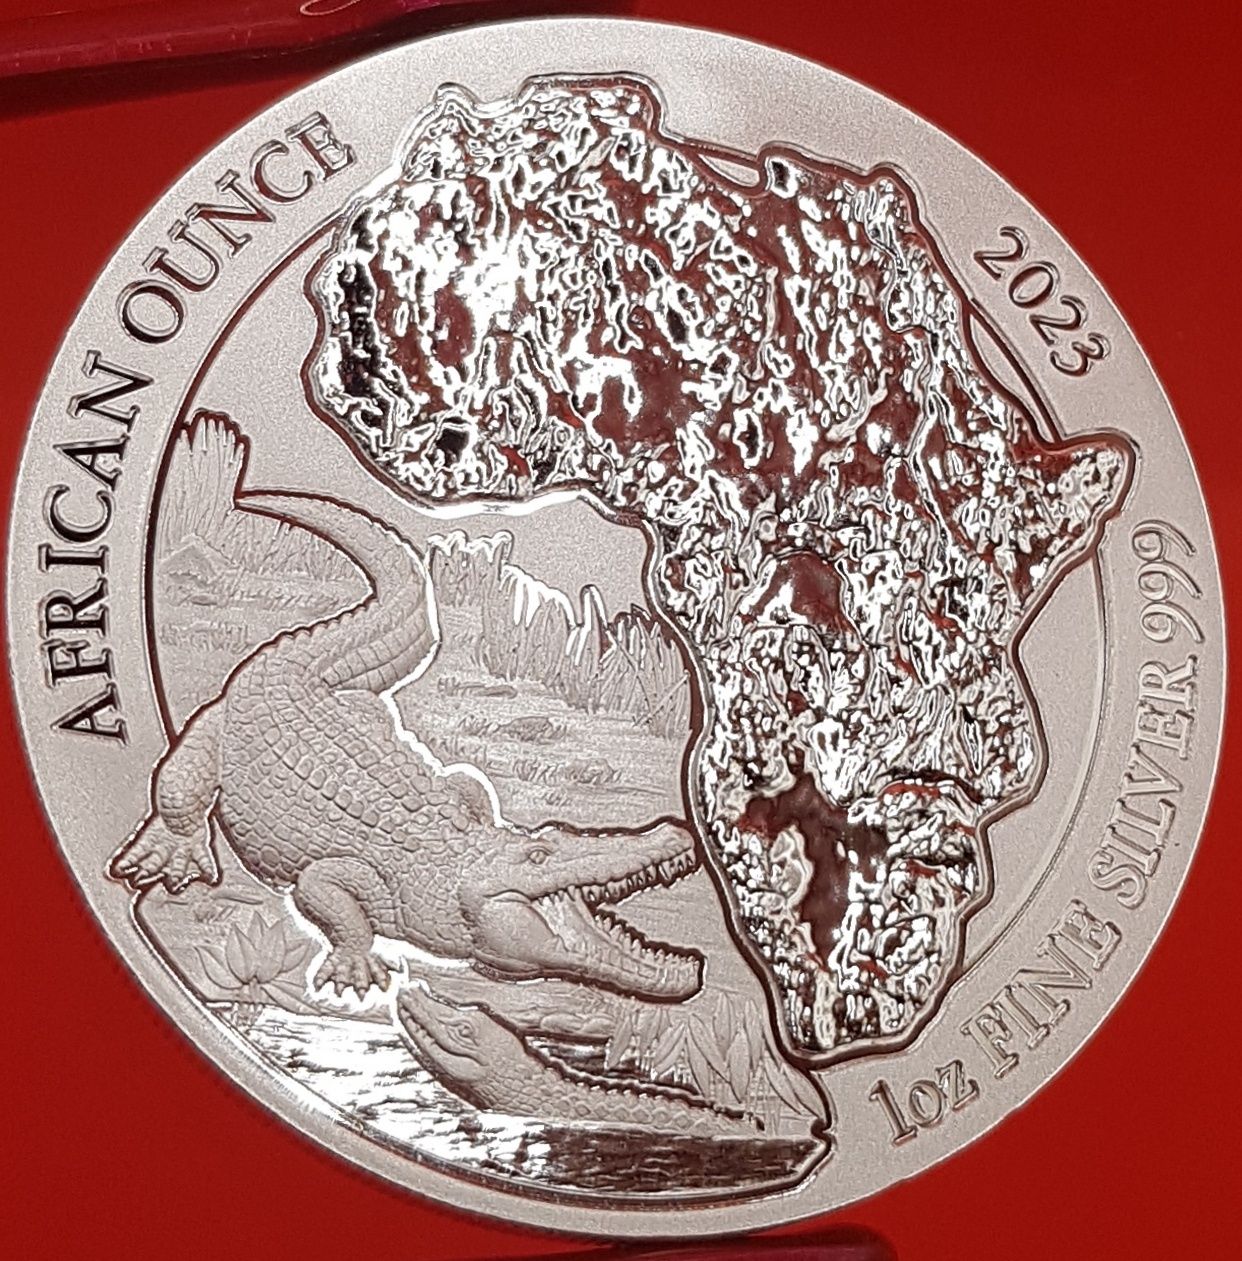 Laos Croatia Cambogia Ruanda monede lingou argint 999